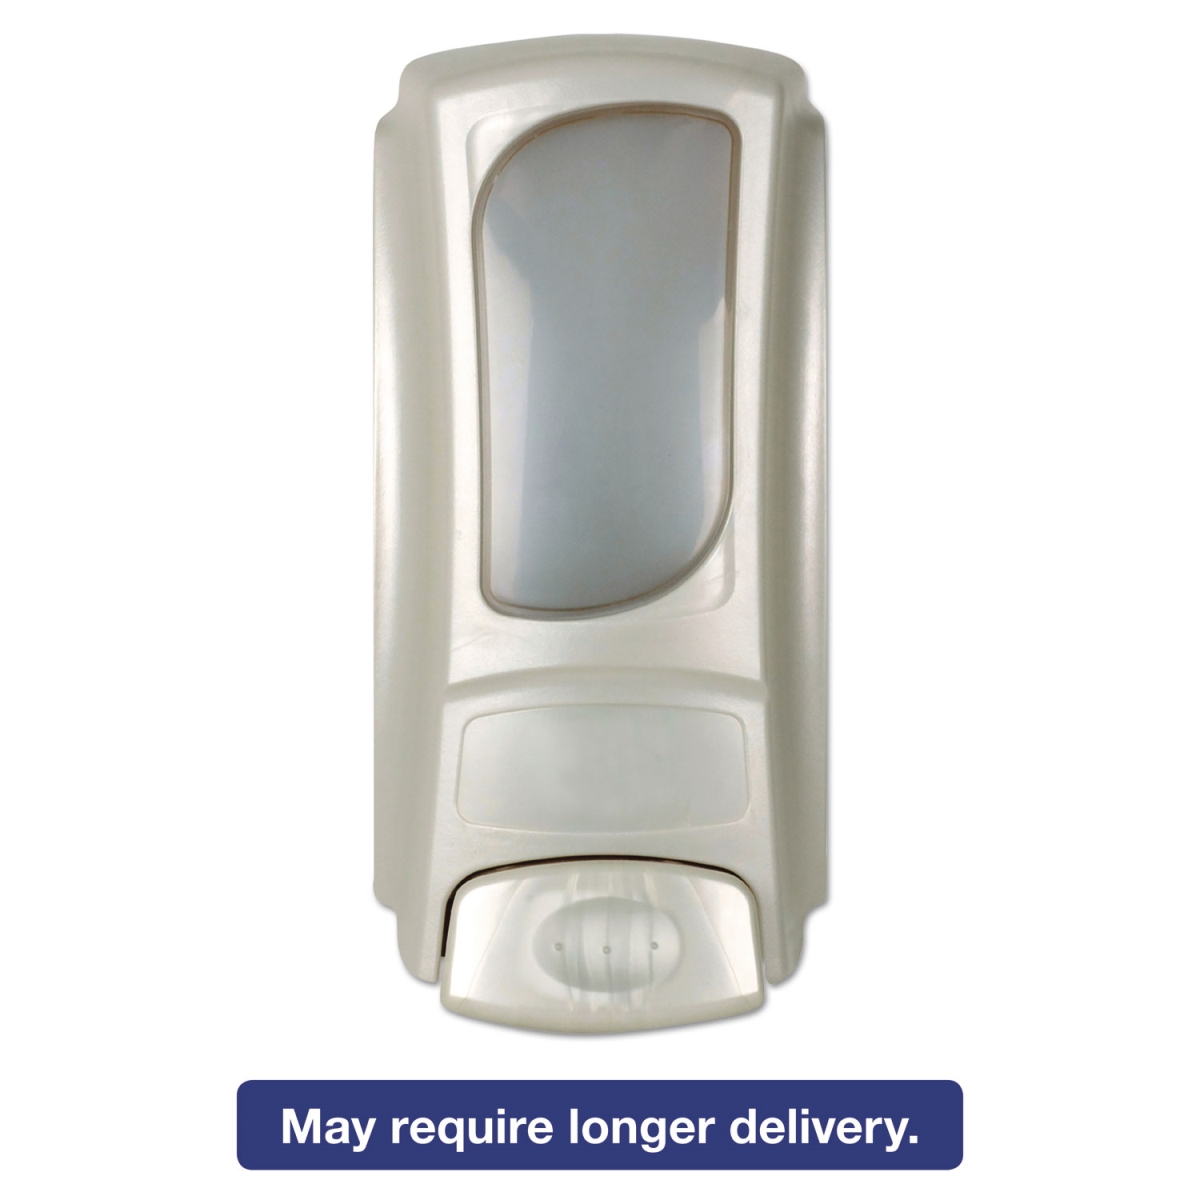 15047ct 15 Oz Eco-smart Flex Dispenser For Refills - Pearl